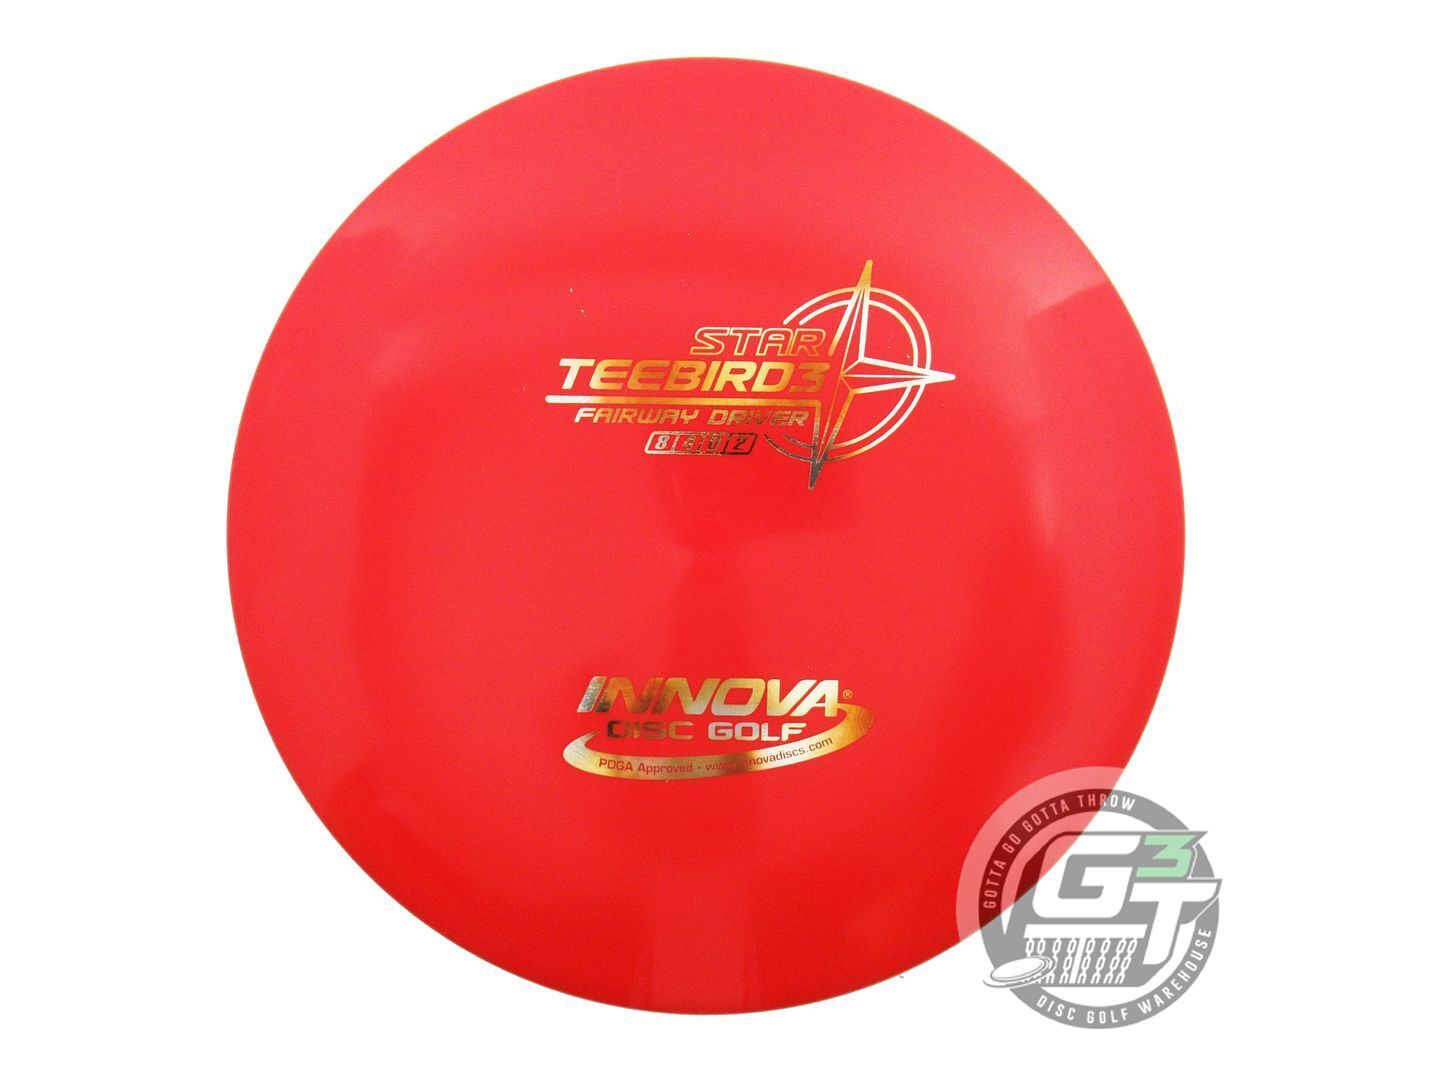 Innova Star Teebird3 Fairway Driver Golf Disc (Individually Listed)